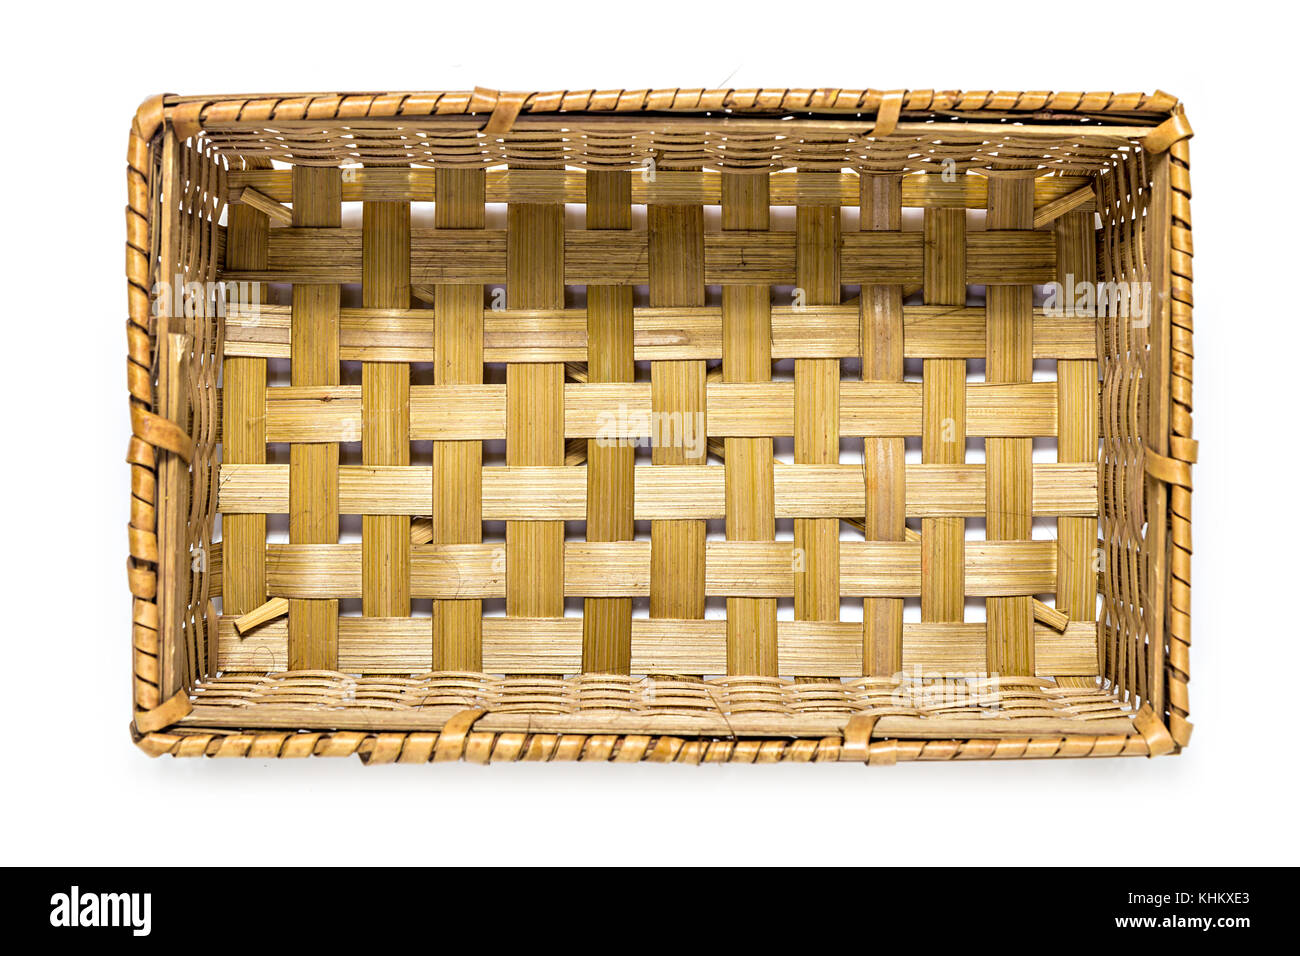 Rectangular Wicker Basket On White Background Stock Photo